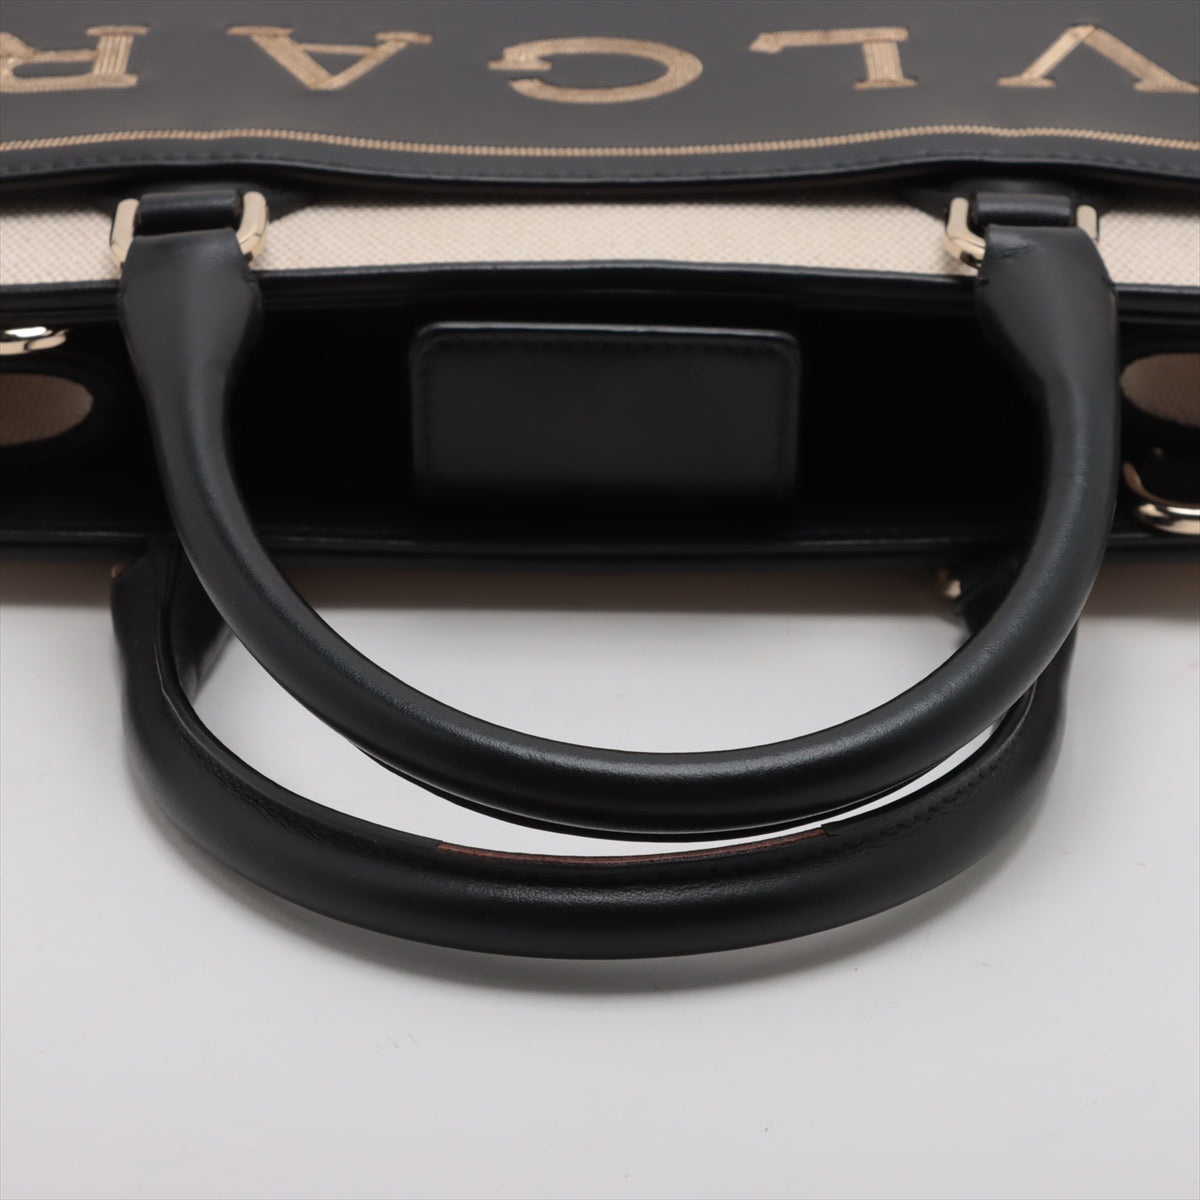 Bvlgari Logo Small Canvas & Leather 2 Way Handbag Black x Beige Strengthens perfume odor